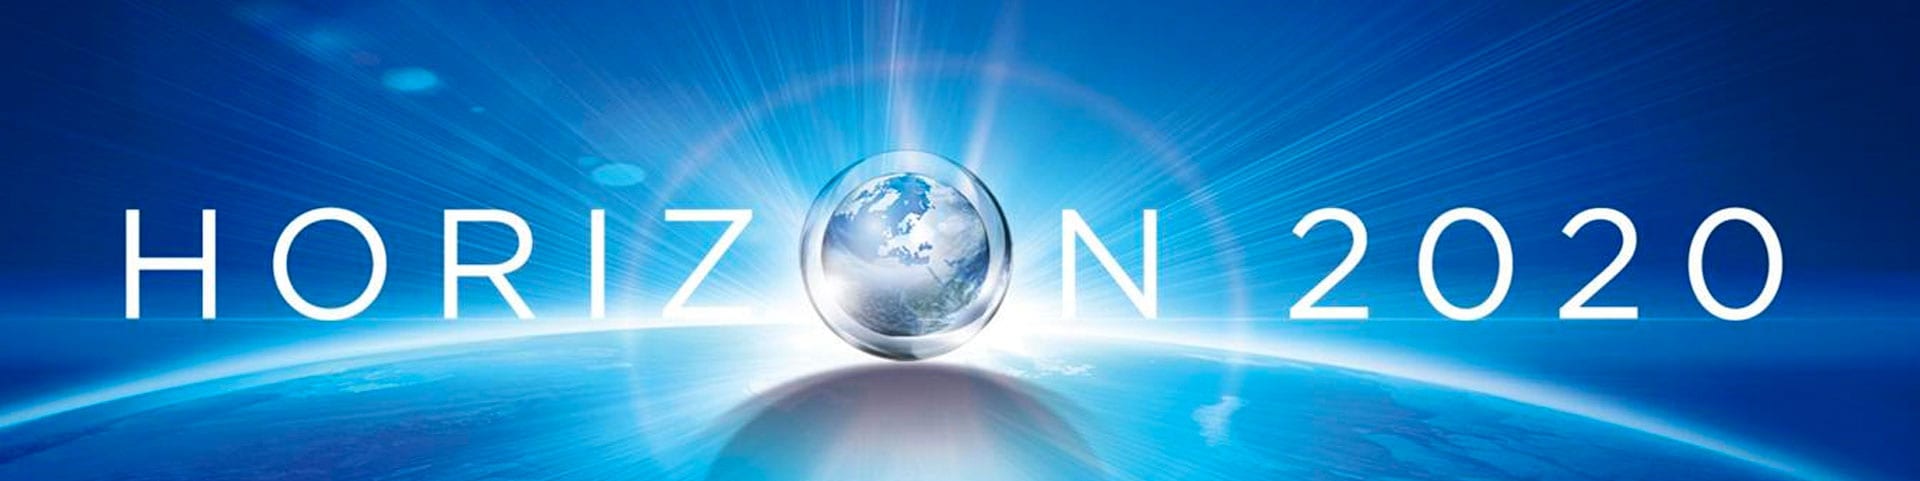 Horizon 2020no alt text set su stradedeuropa.eu